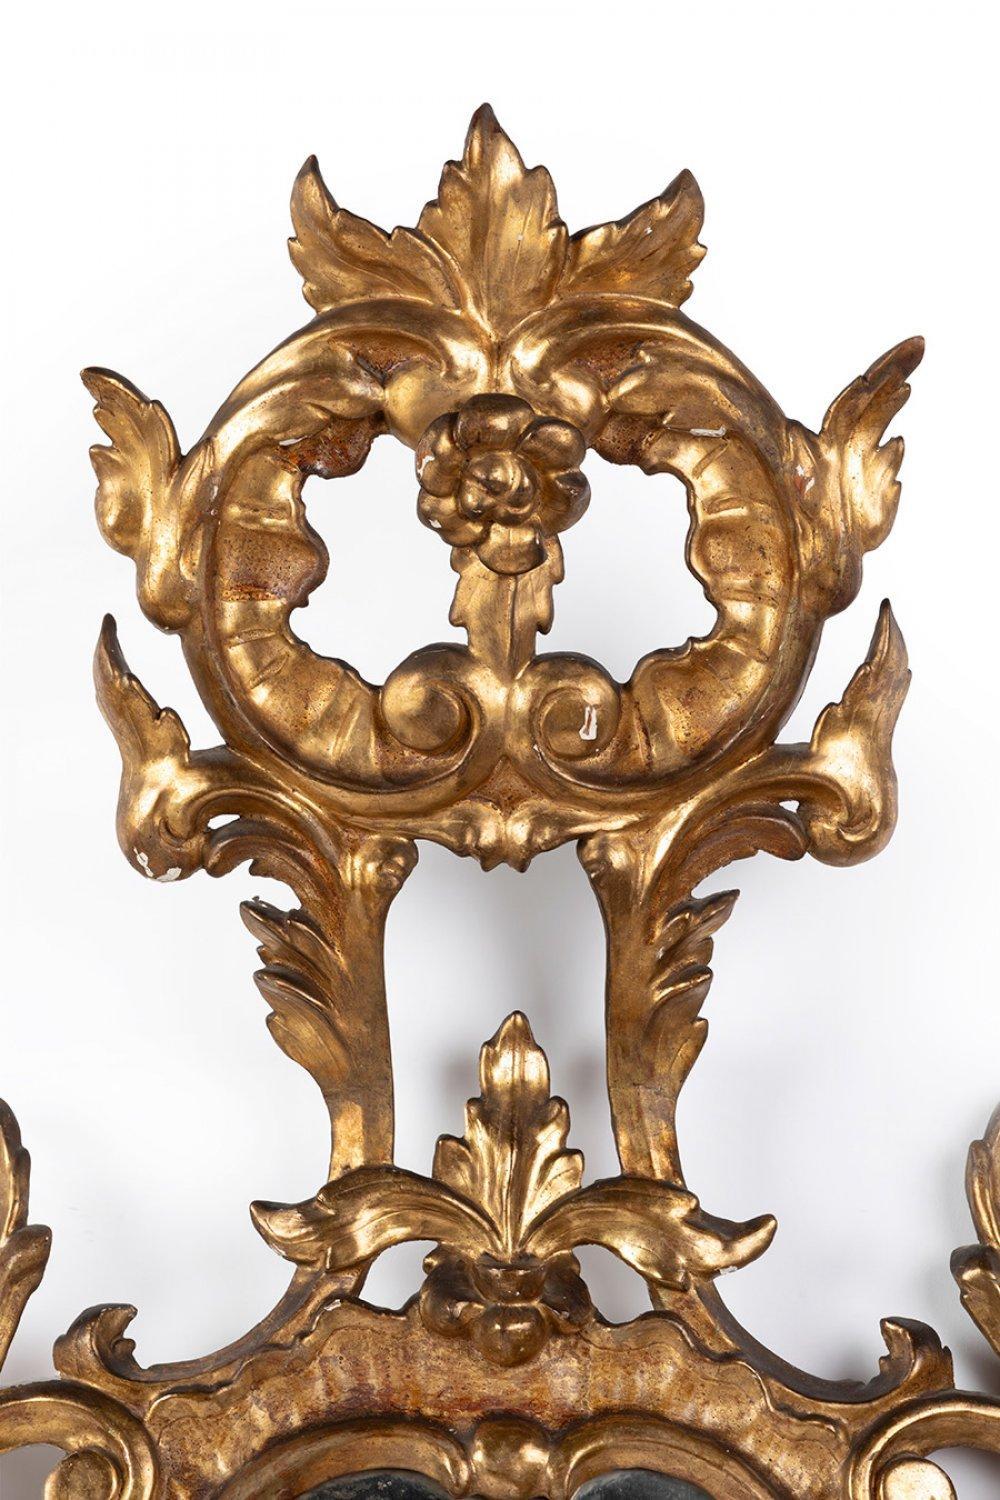 Carved Pair of large and elaborate European Antique Giltwood Cornucopia Mirrors